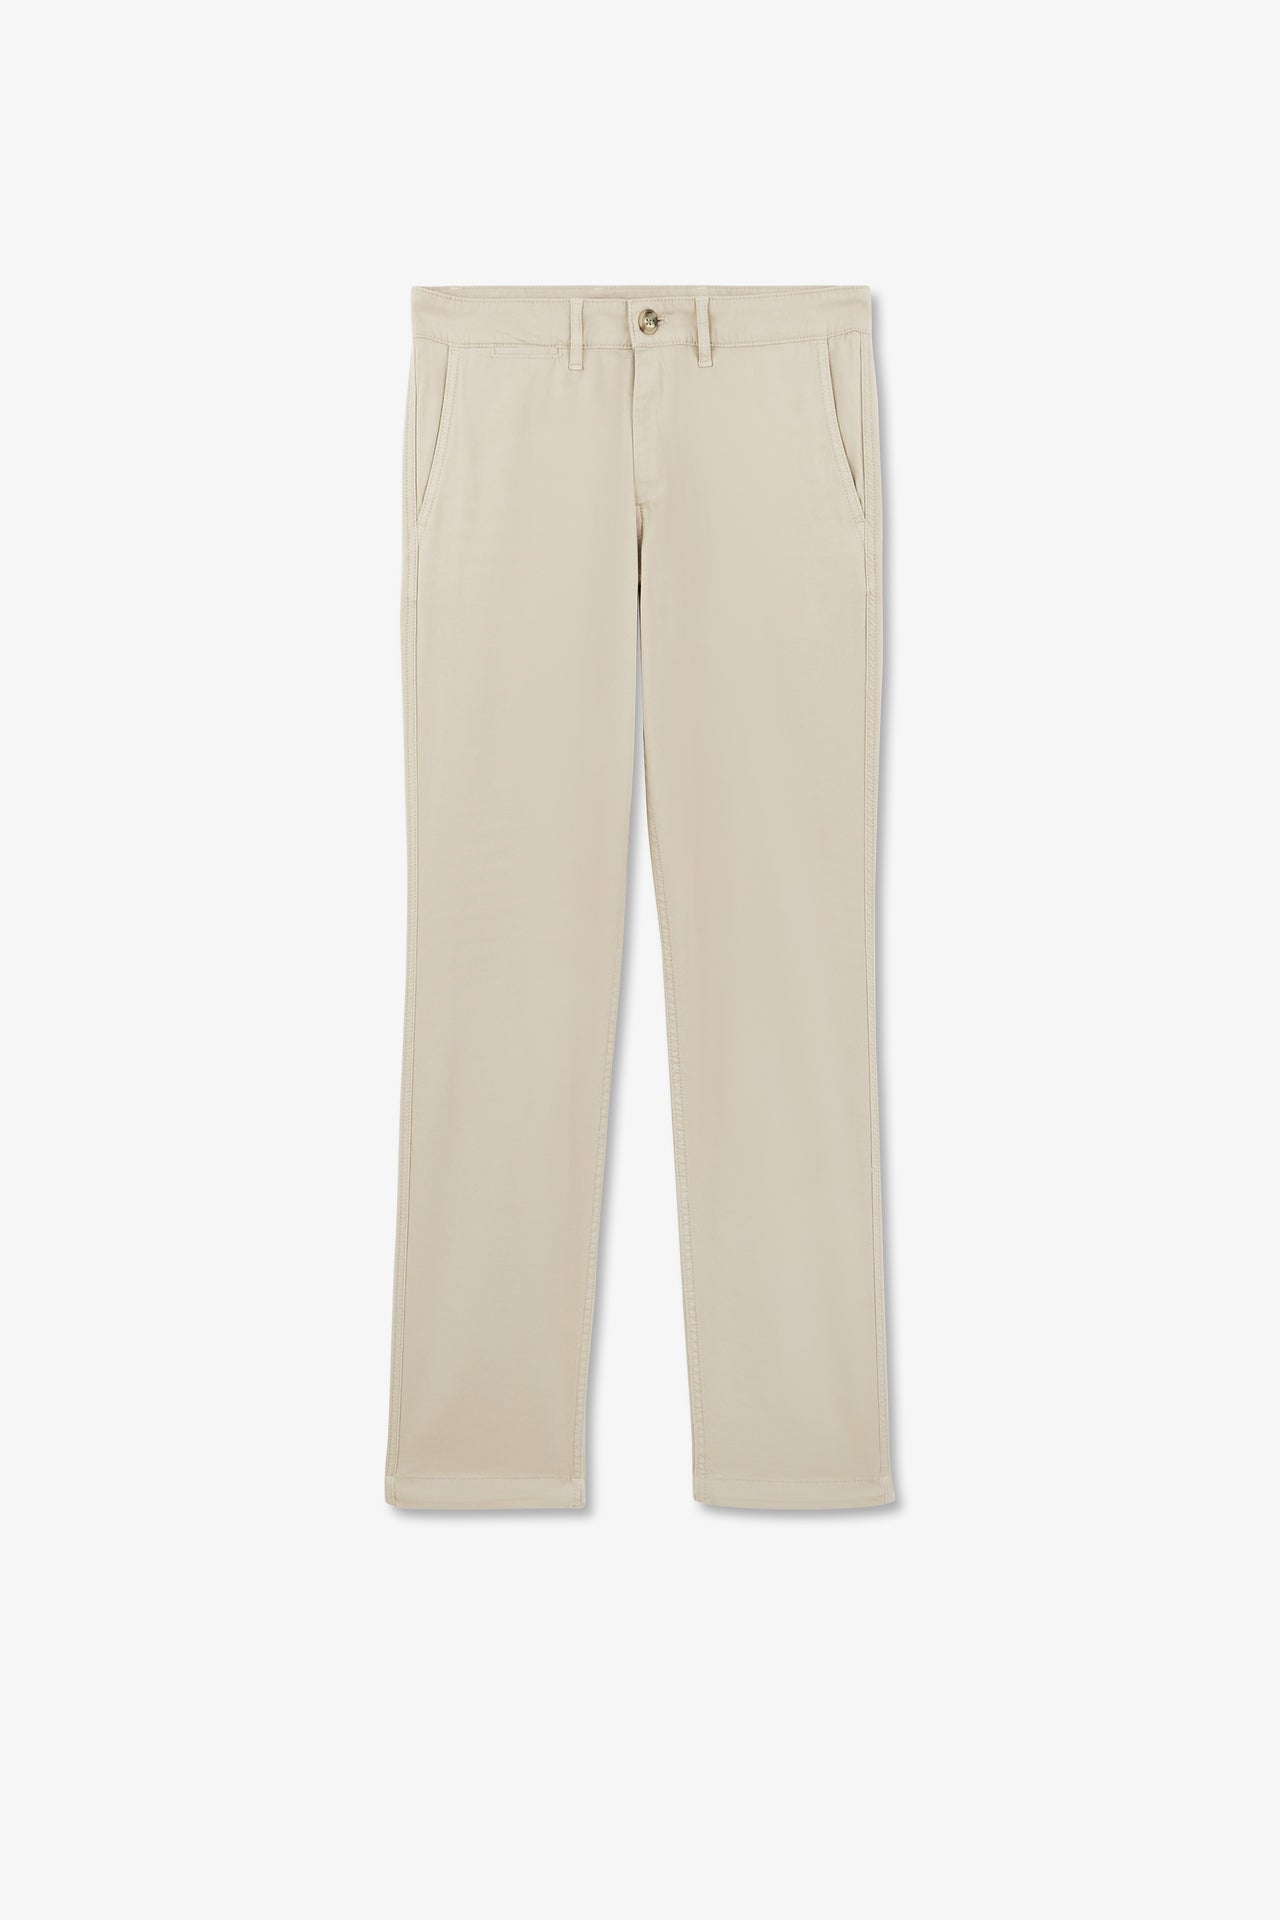 Pantalon chino sans plis beige - Image 2